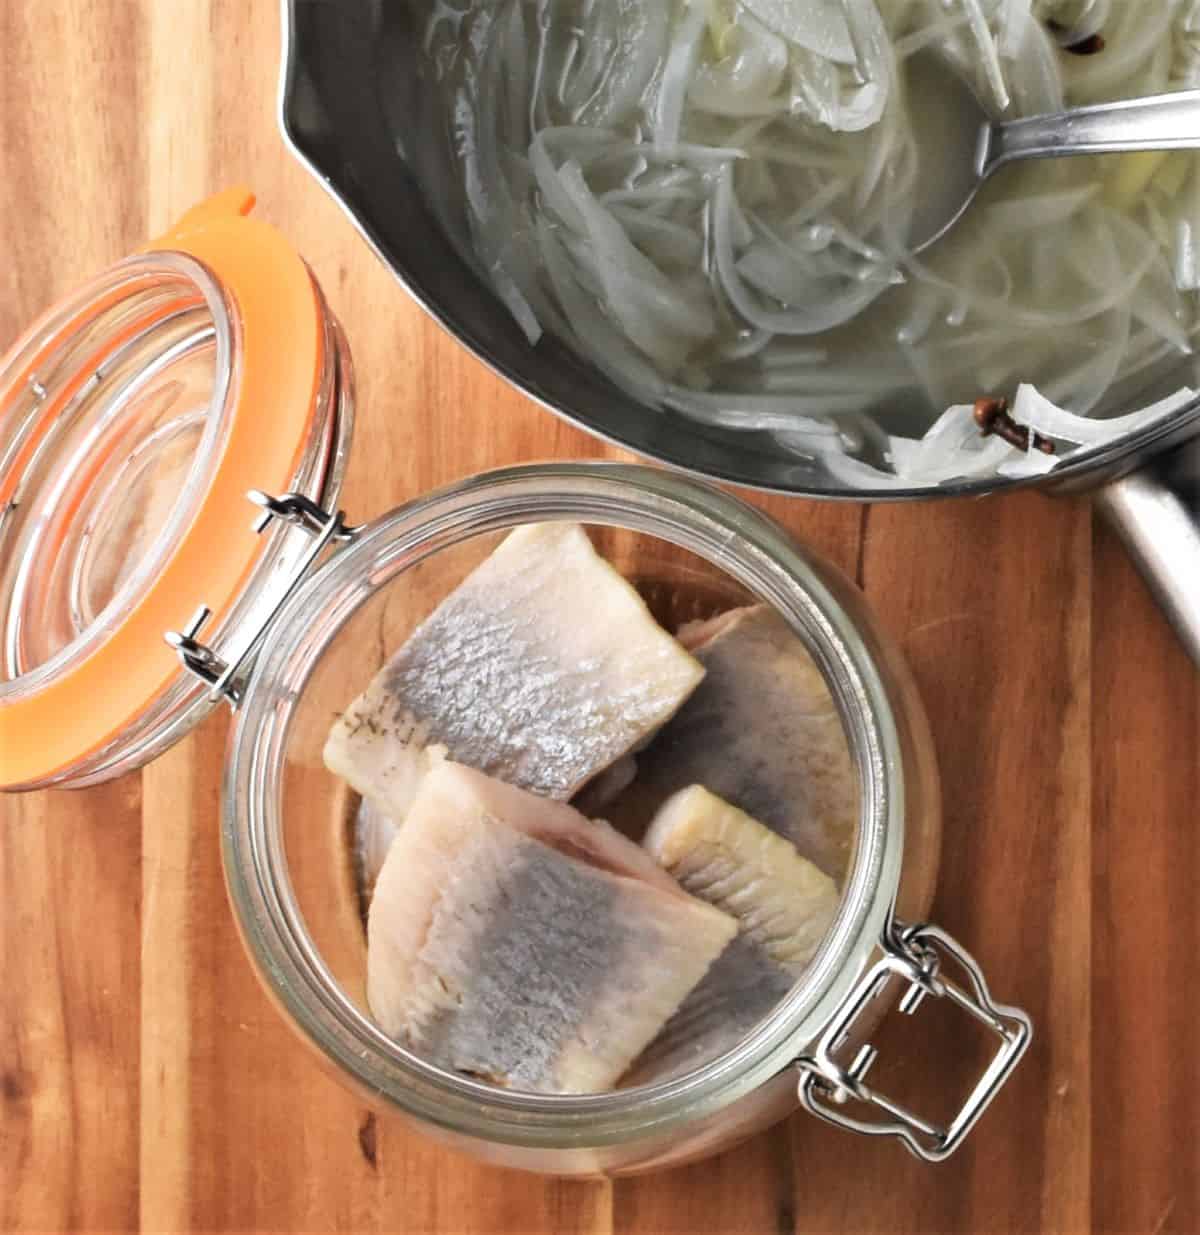 Pieces of herring in open jar and onion vinegar mixture in saucepan.